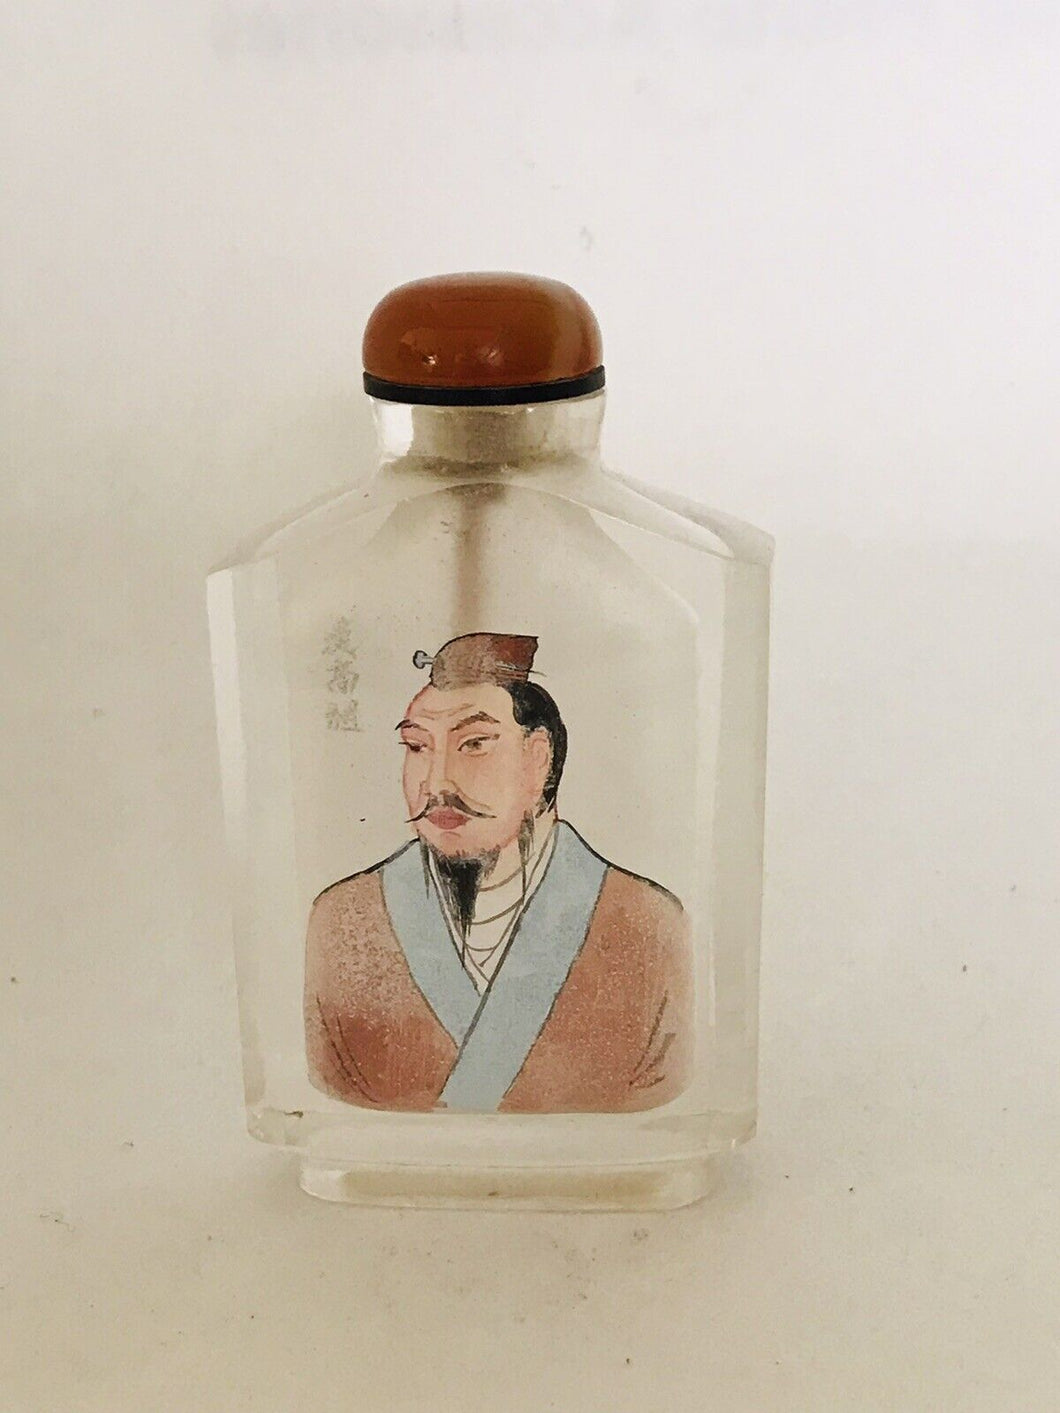 Snuff Bottle: Inside Painted Bottle Illustrating Life of Han Gaozu Founder of Han Dynasty